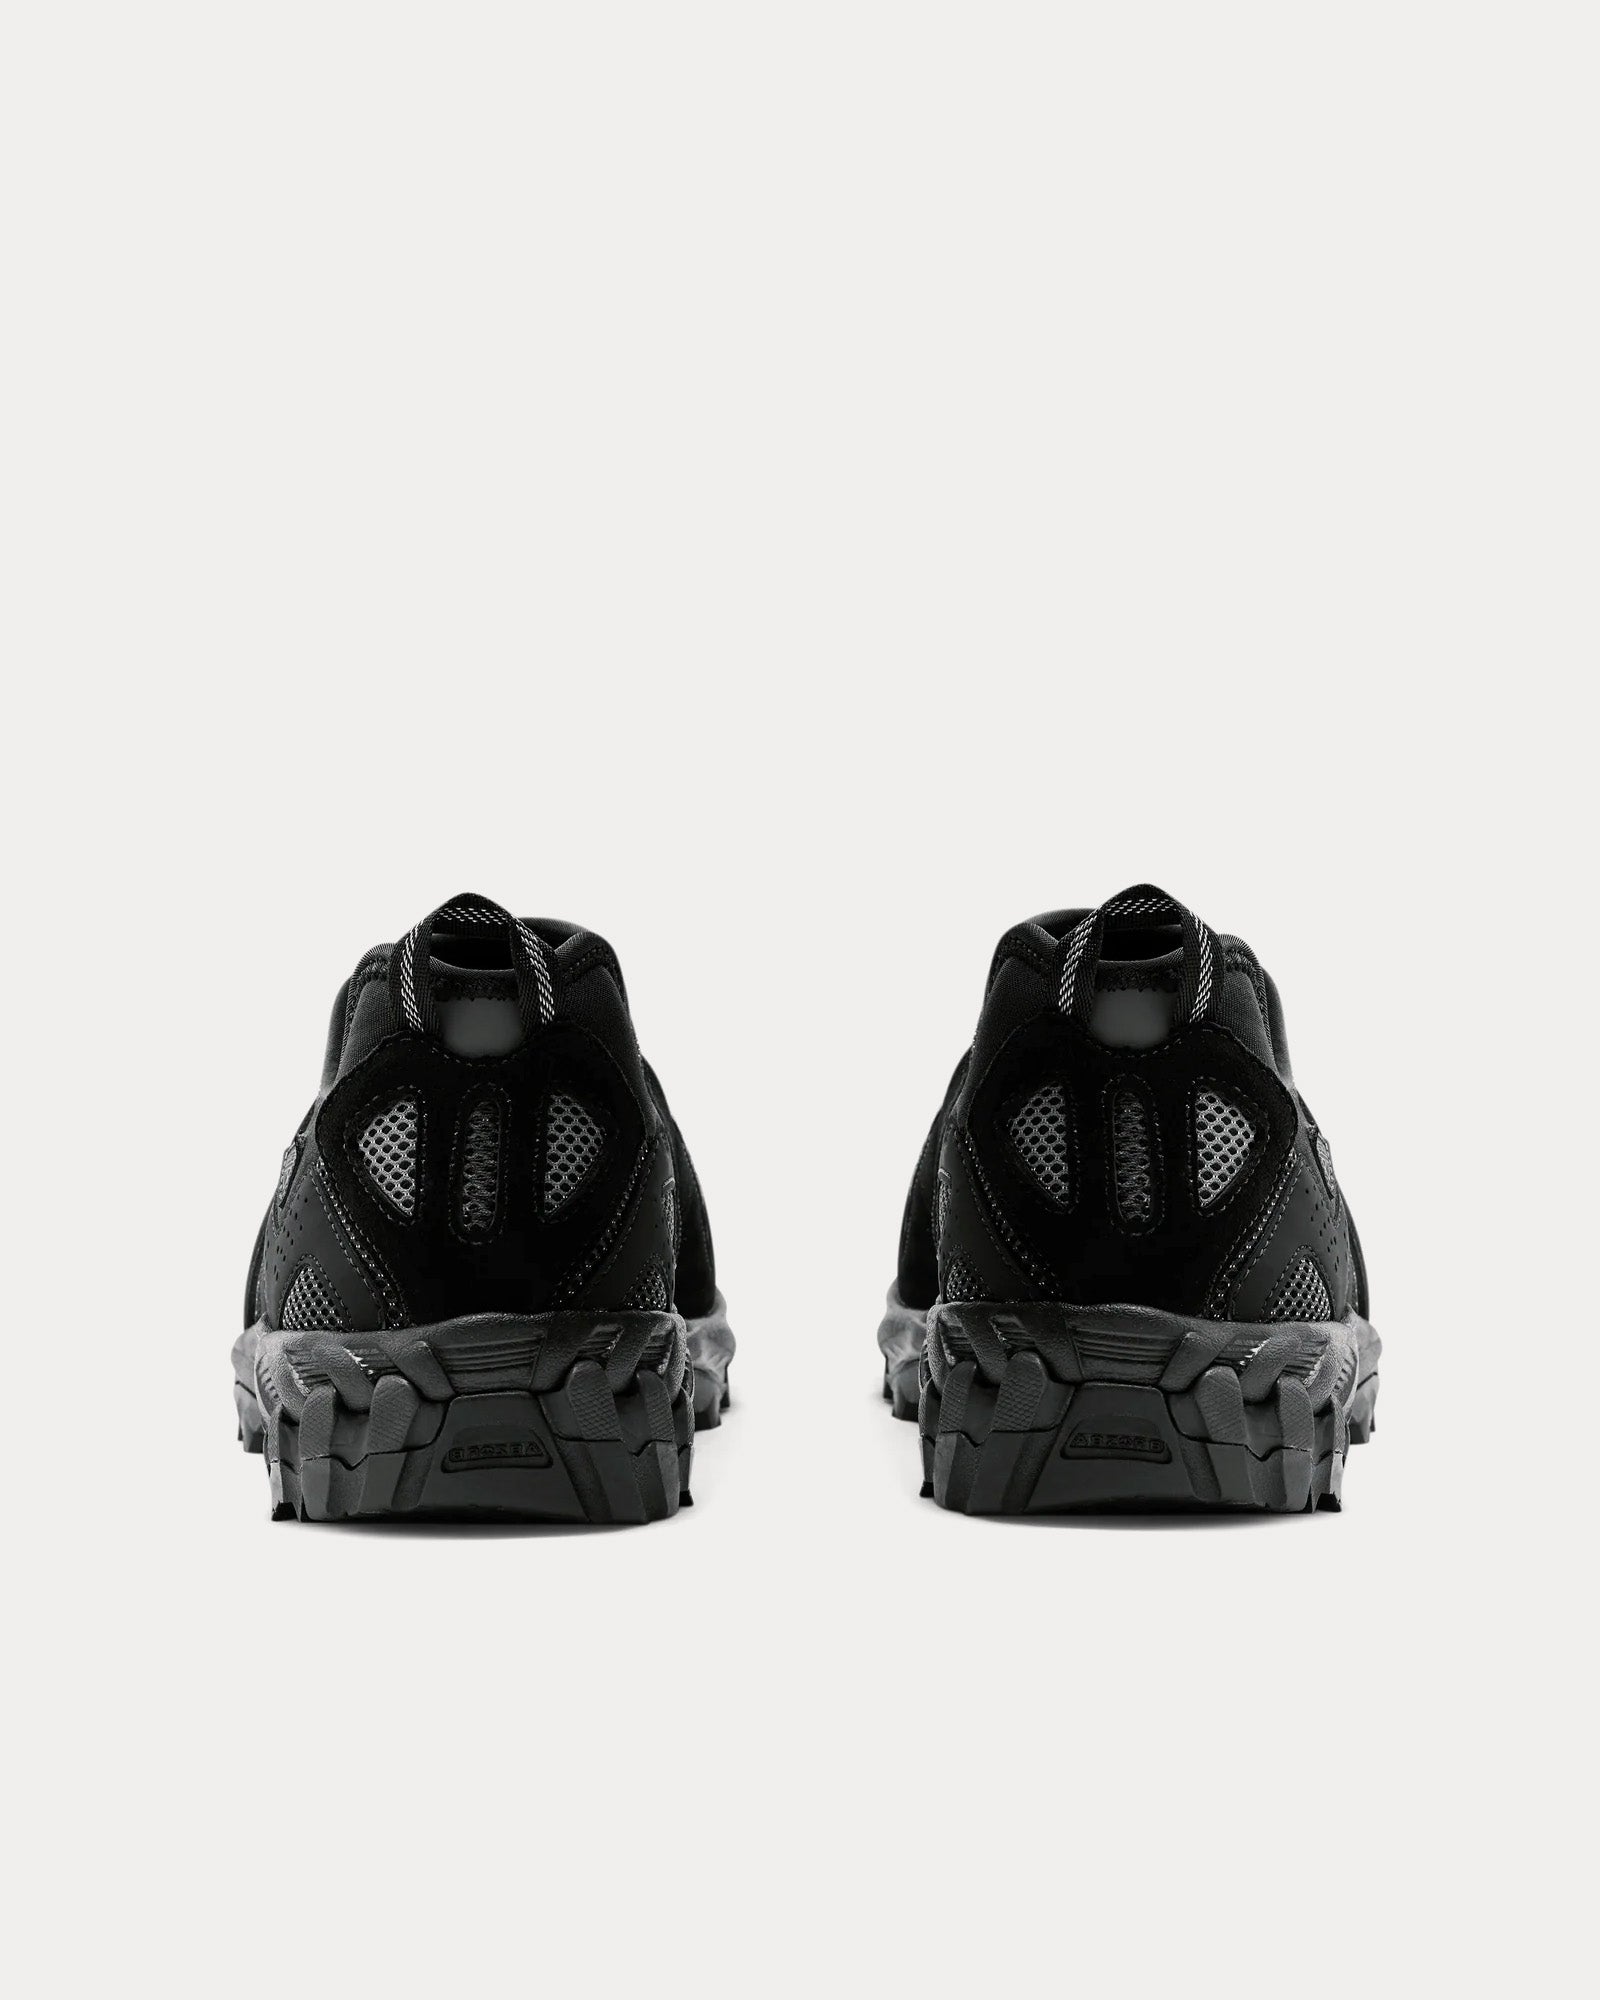 New Balance x Comme des Garçons Homme - 610s Black Slip On Sneakers